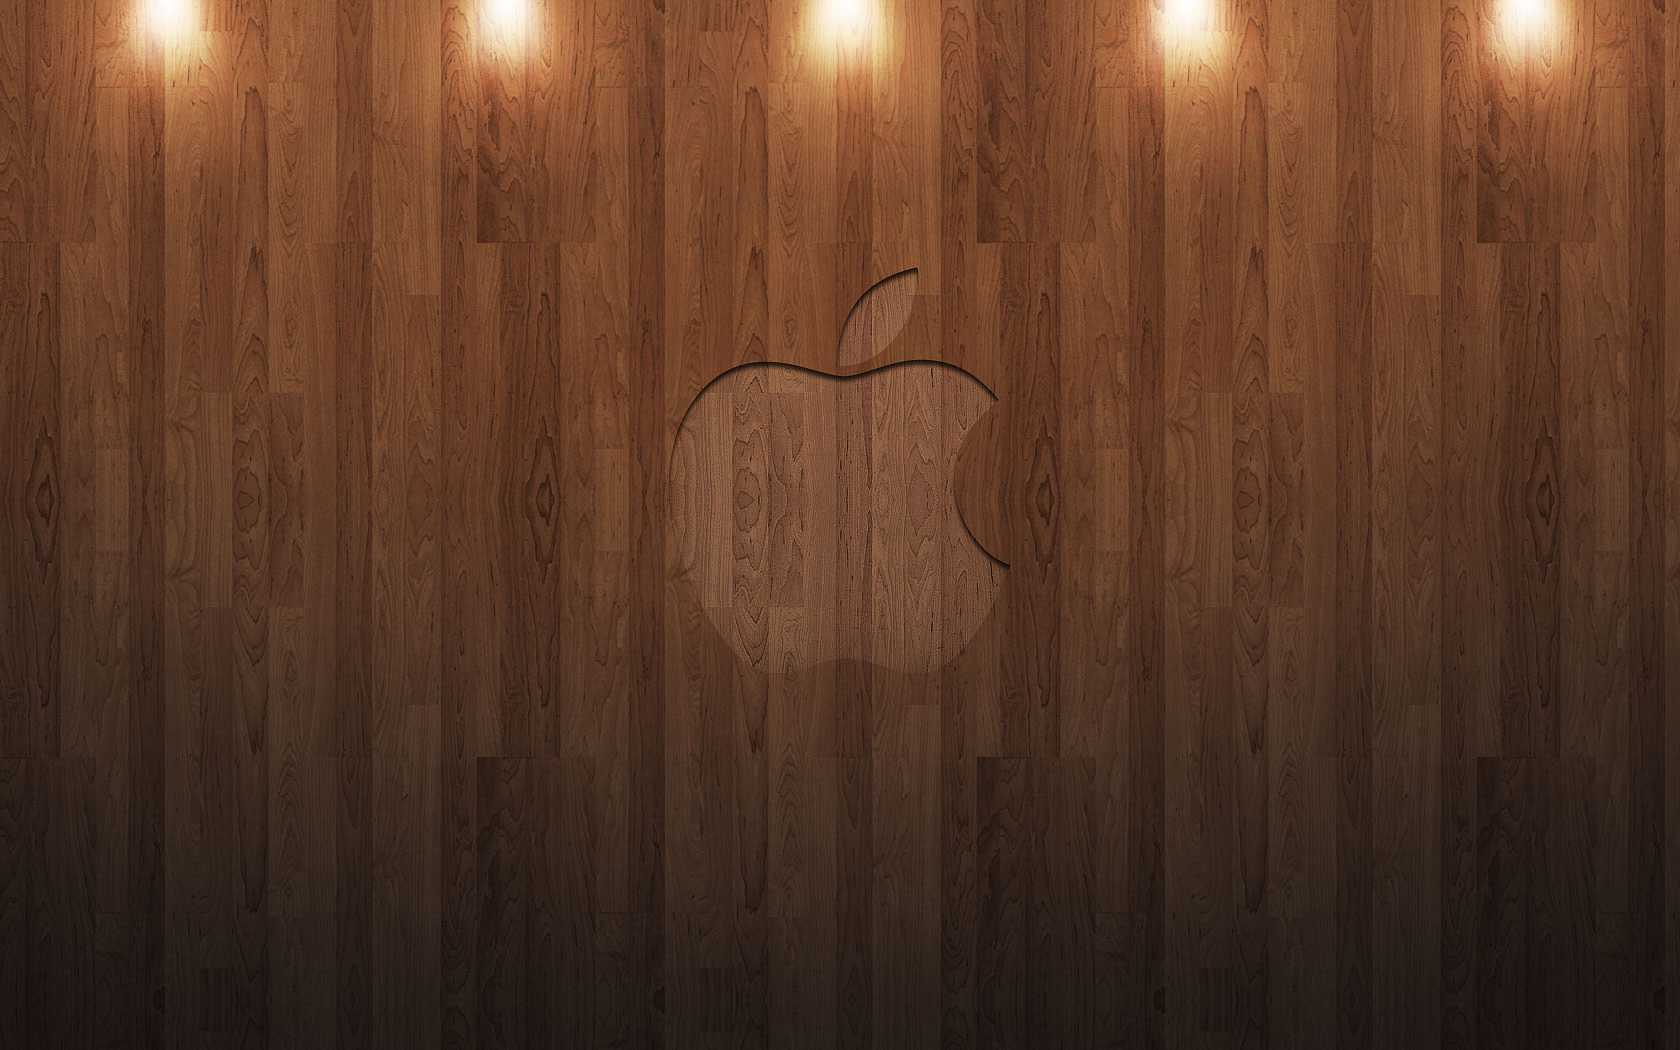 Apple wood wallpaper